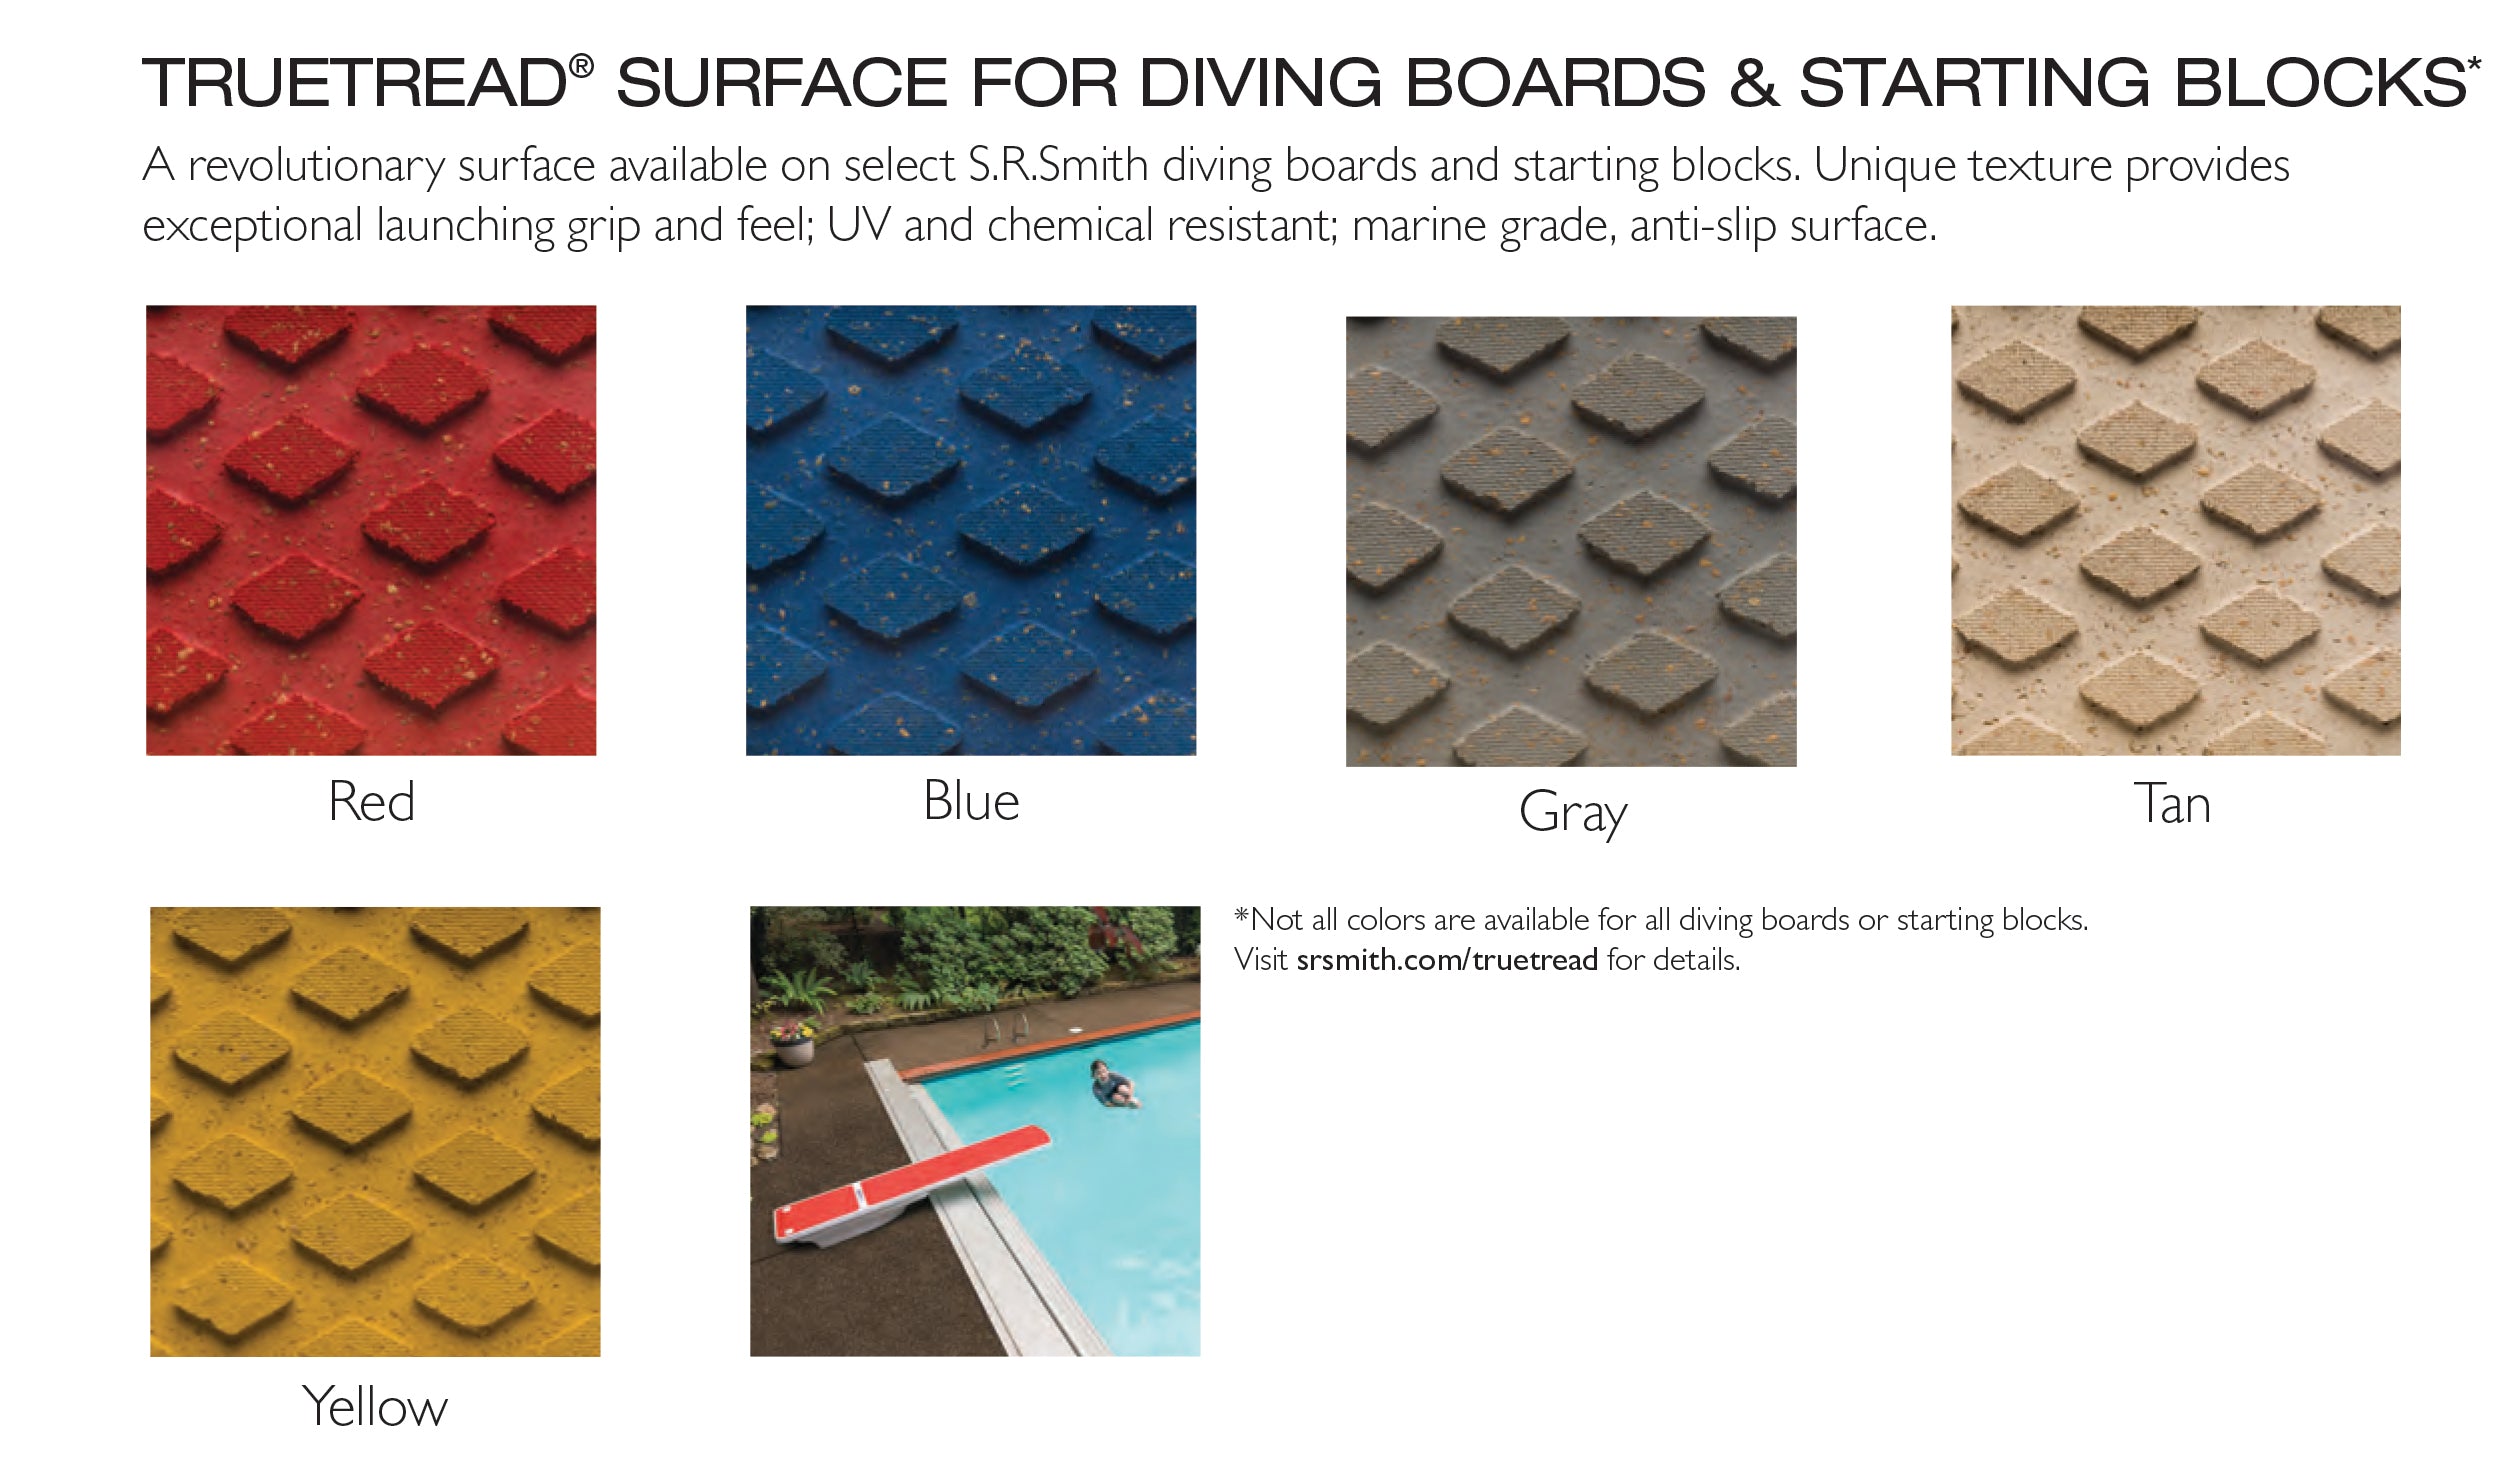 Flyte Deck II Stand With 6 Foot TrueTread Board - White Stand and Board With Tan TrueTread